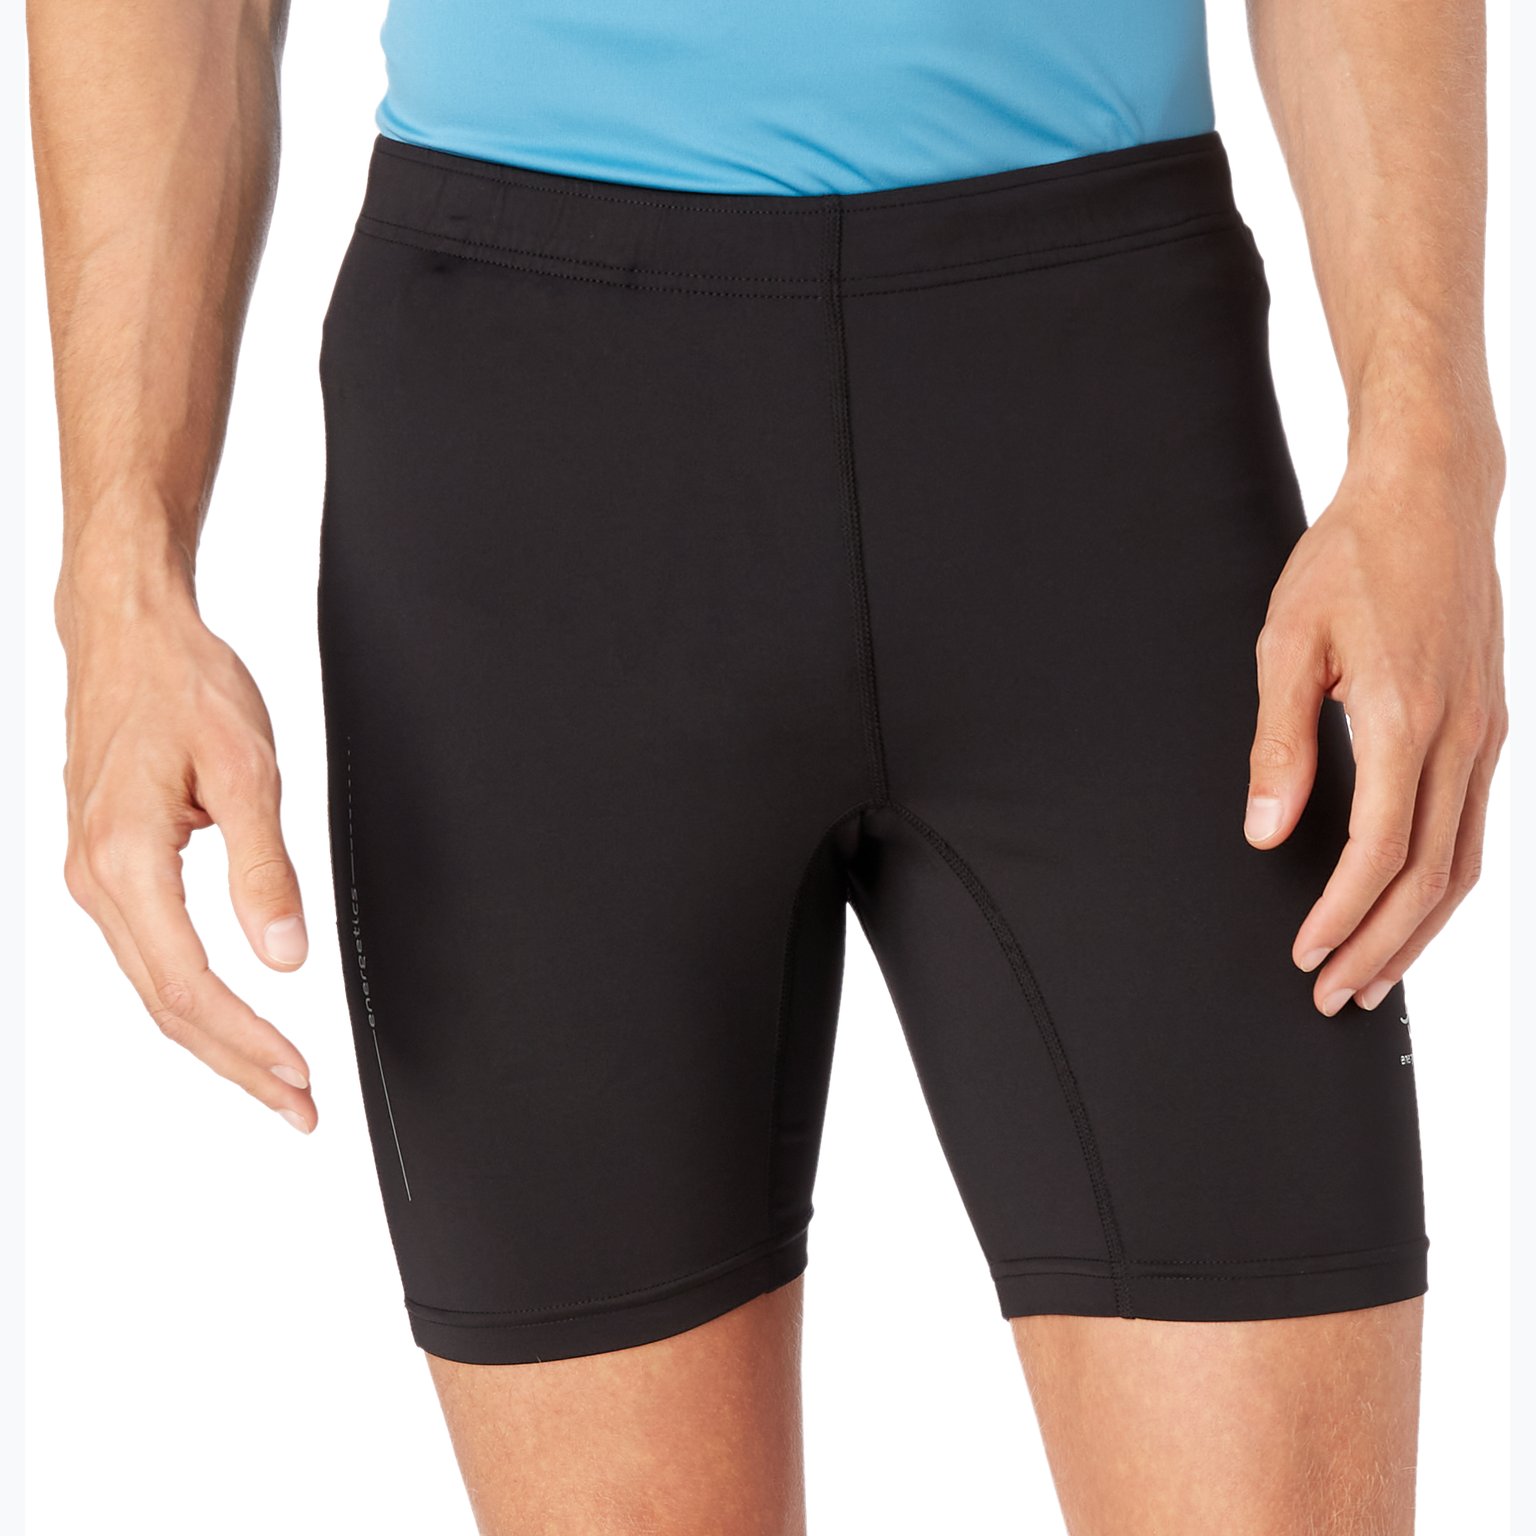 Perico UX shorts